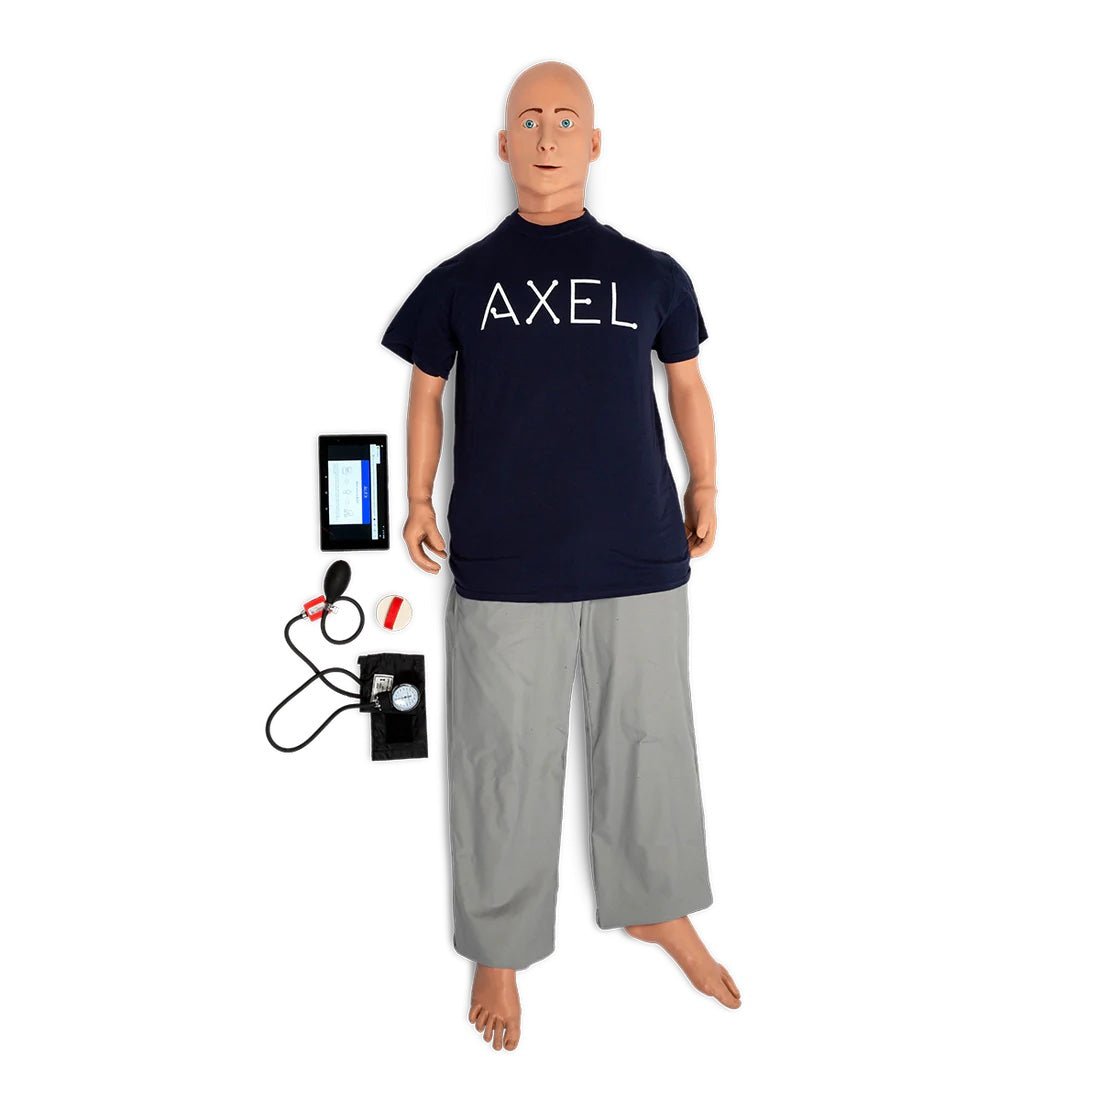 AXEL Patient Simulator - American Hospital Supply